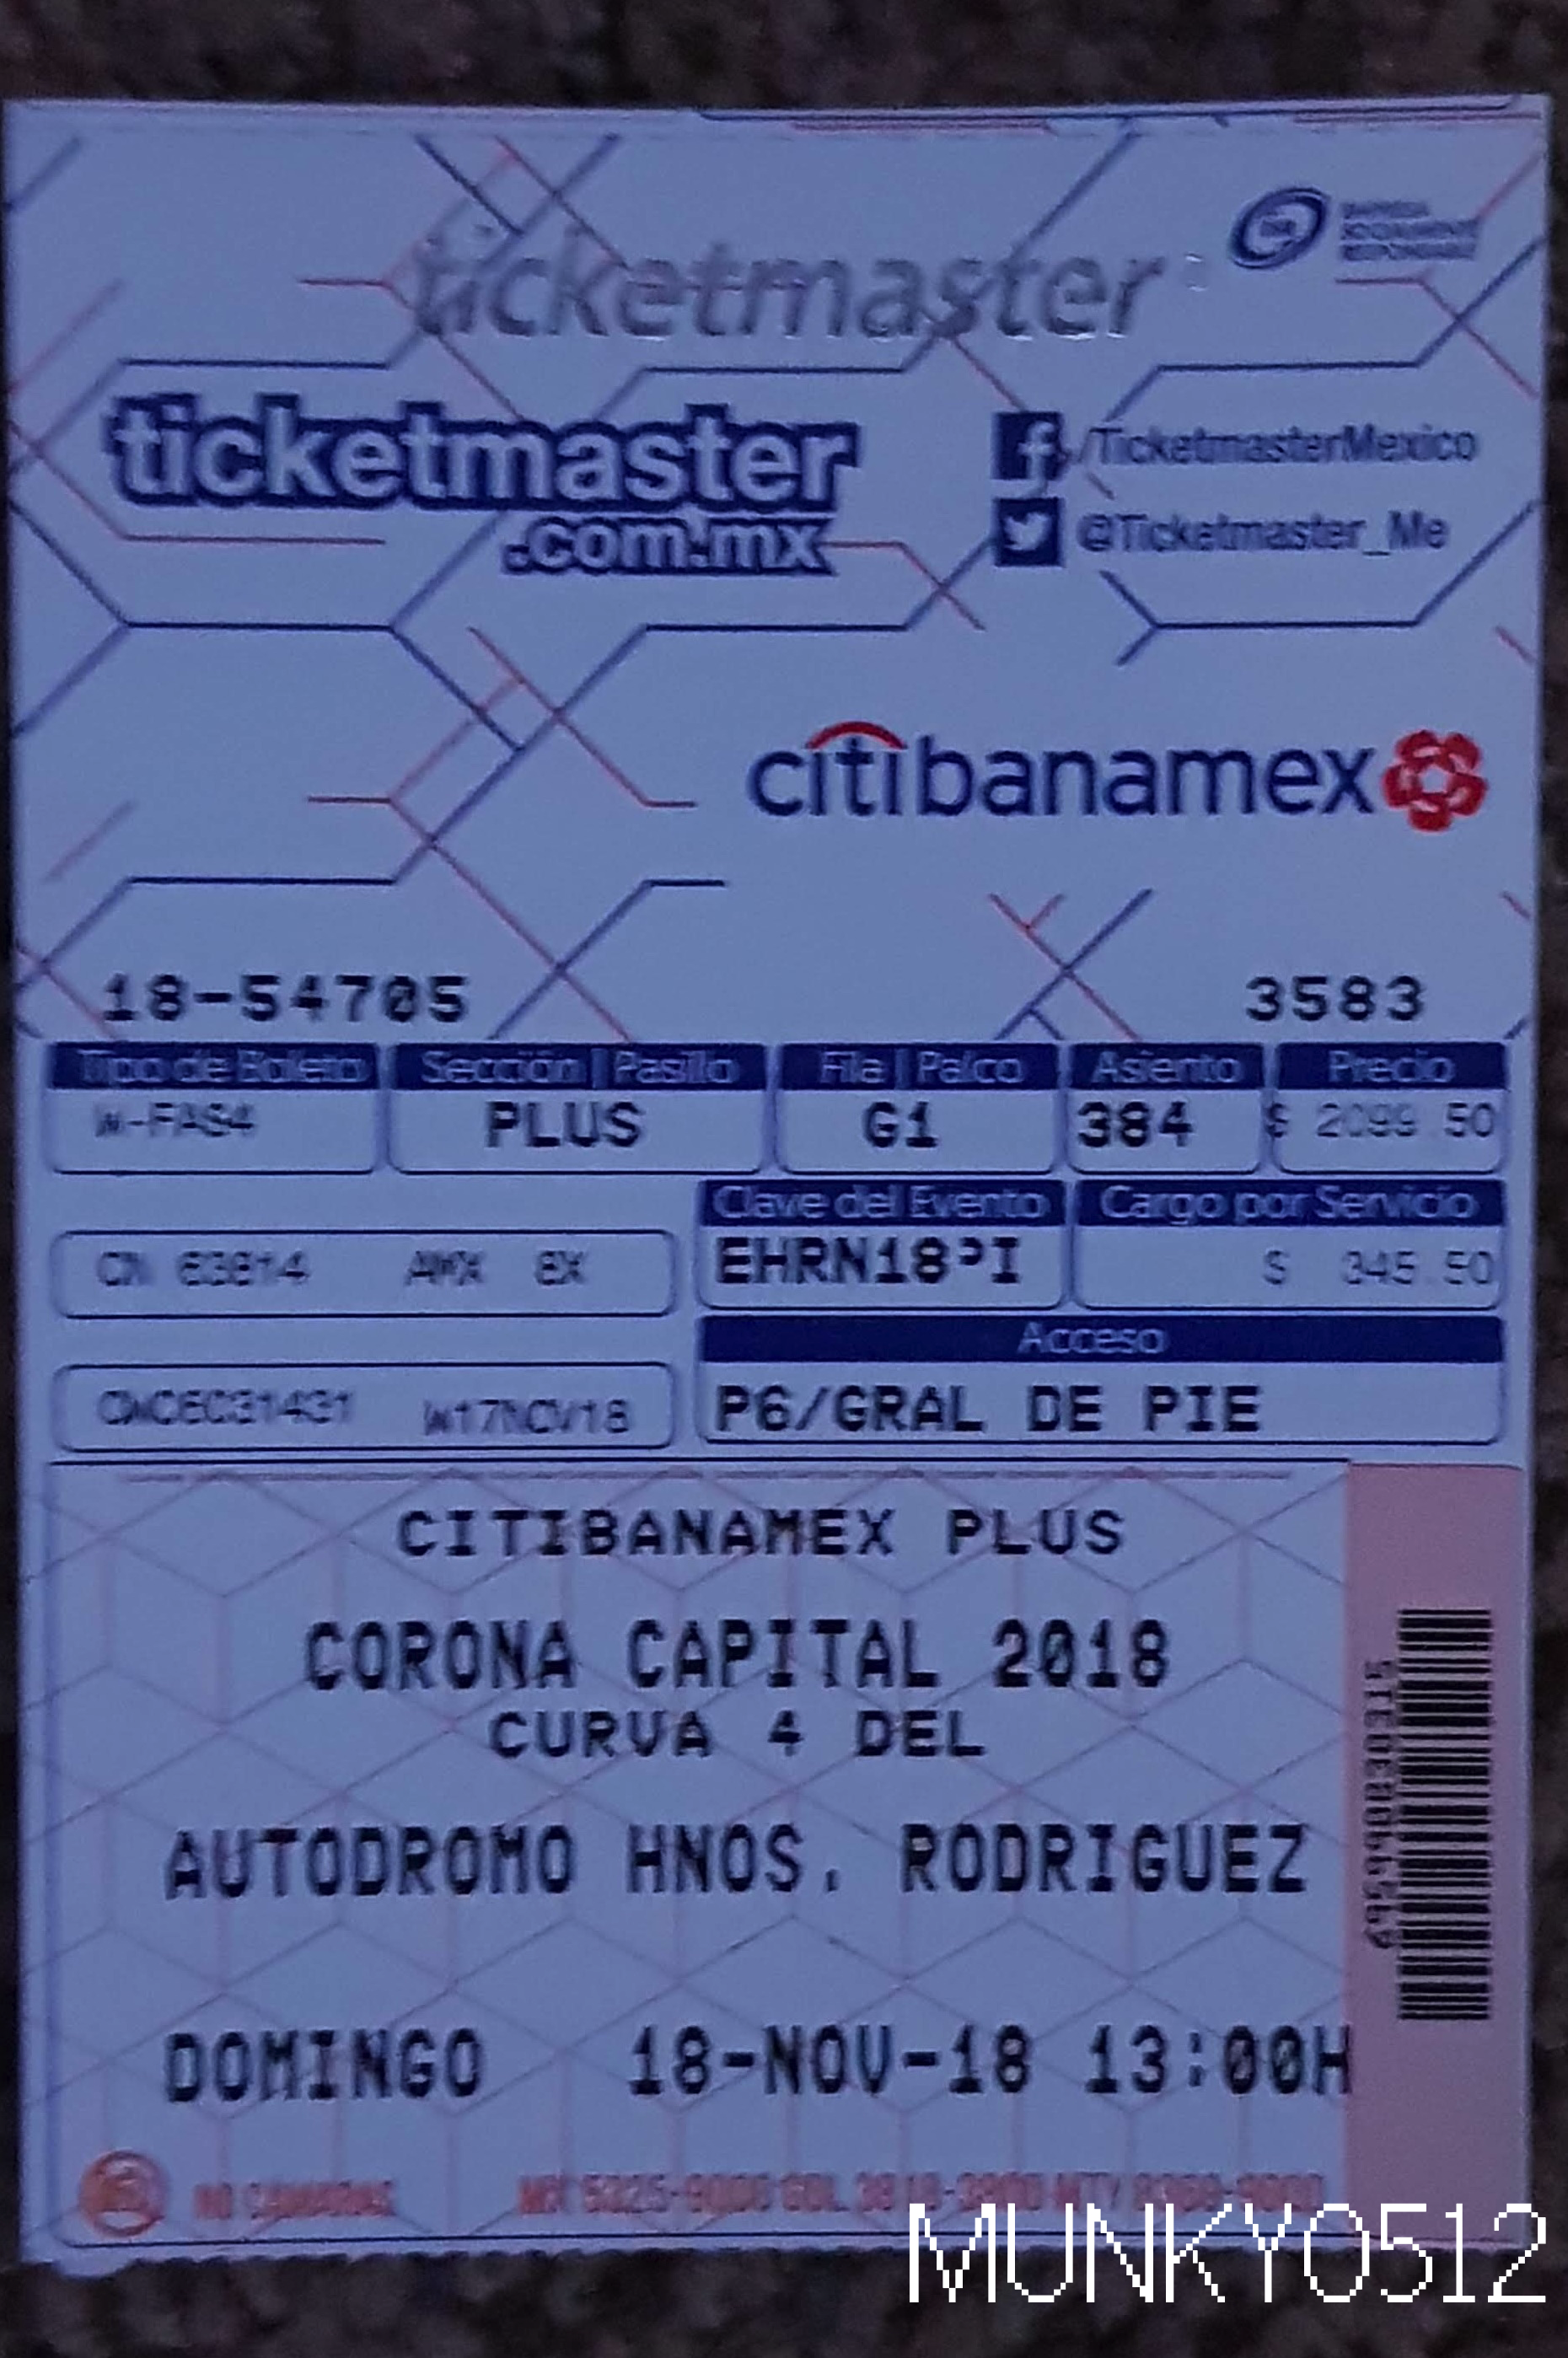 11/18/2018 Corona Capital Fest Ticket